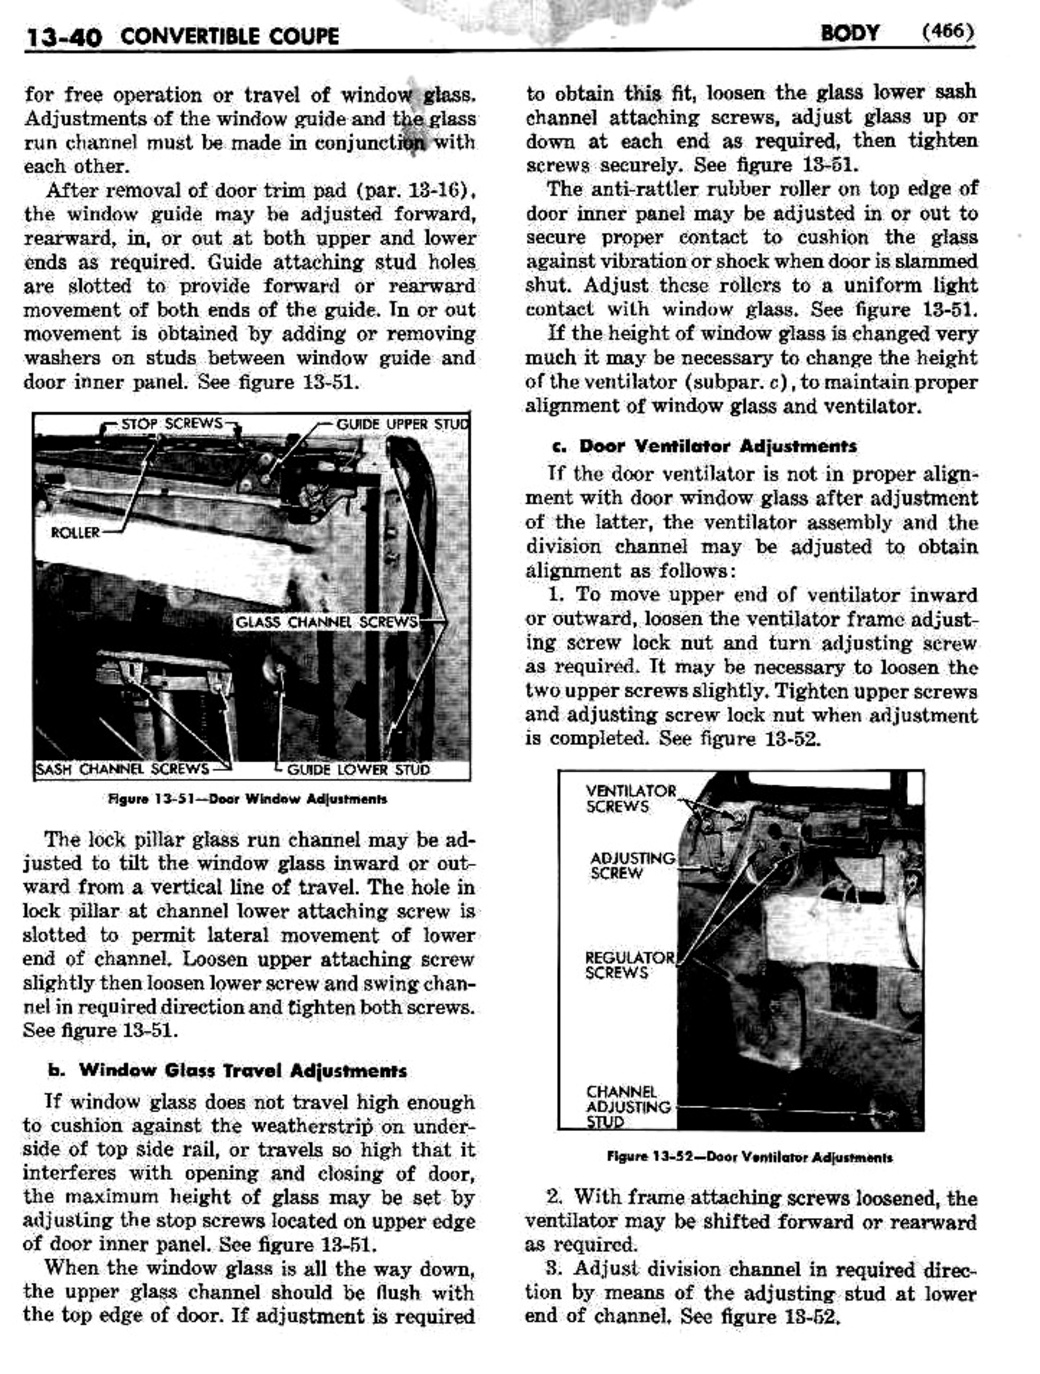 n_14 1951 Buick Shop Manual - Body-040-040.jpg